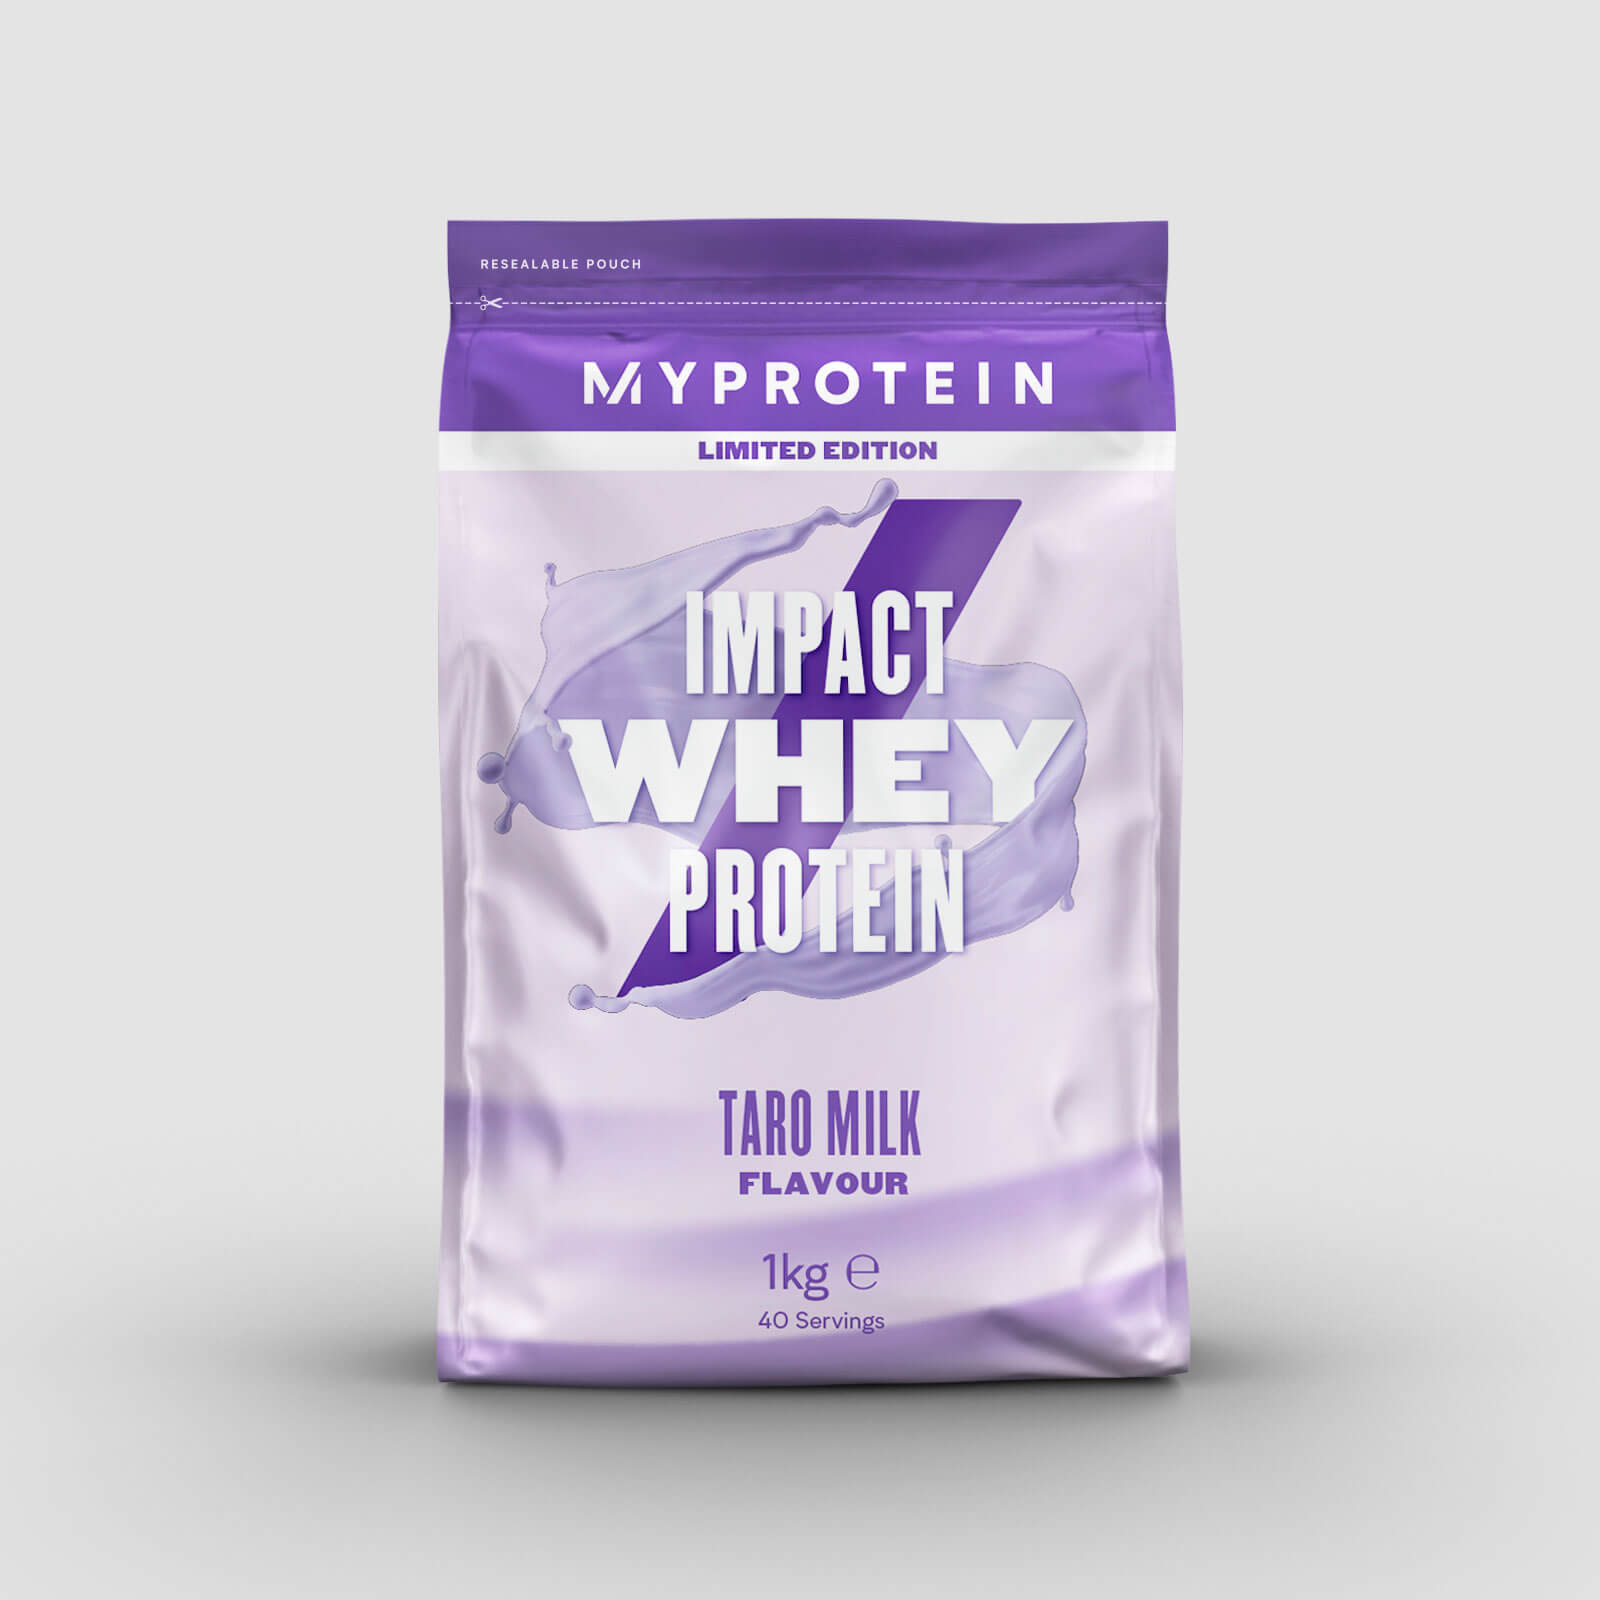 Myprotein Impact Whey Protein, Taro Milk (ALT)